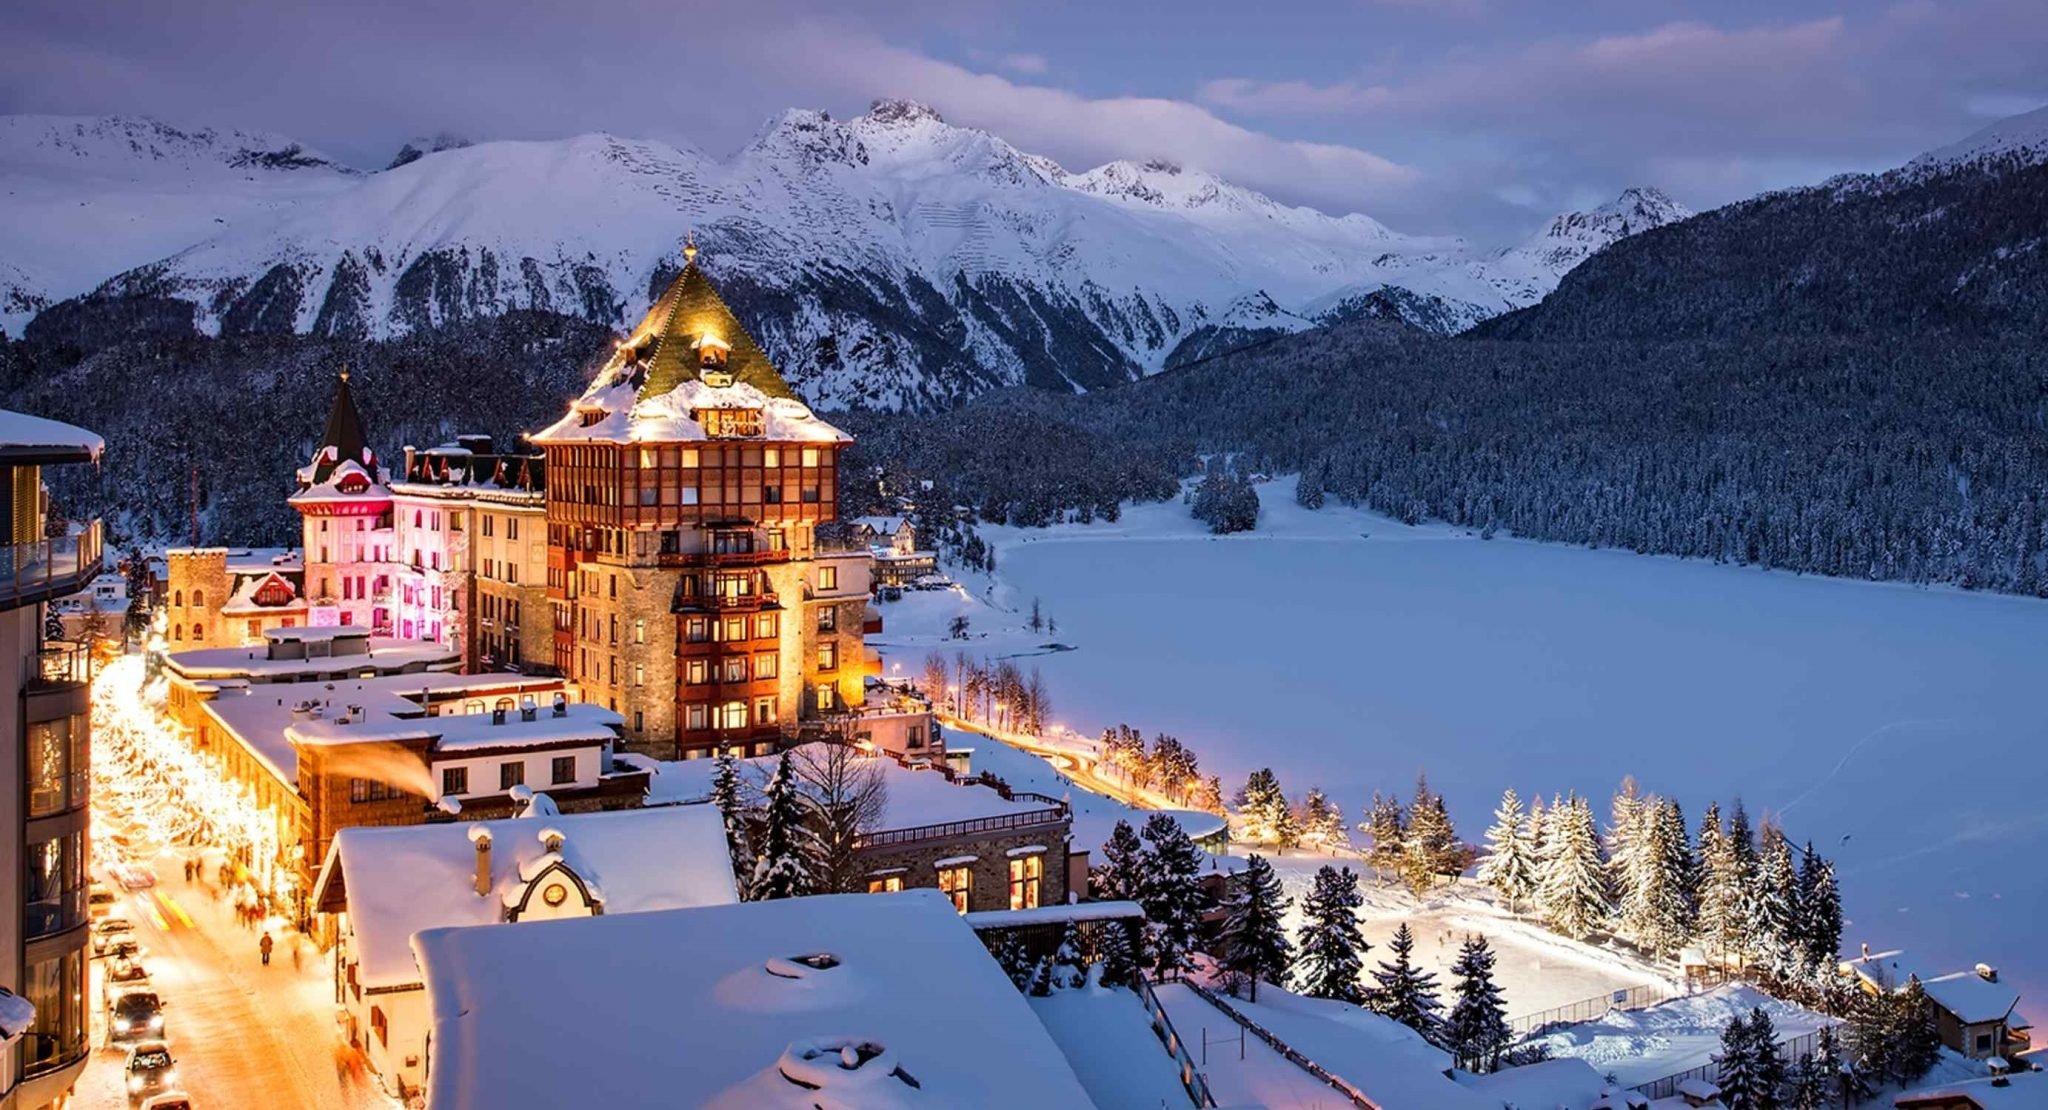 St moritz. Санкт-Мориц Швейцария. Санкт-Мориц Швейцария горнолыжный курорт. Швейцария Альпы горнолыжные курорты. St Moritz горнолыжный курорт.